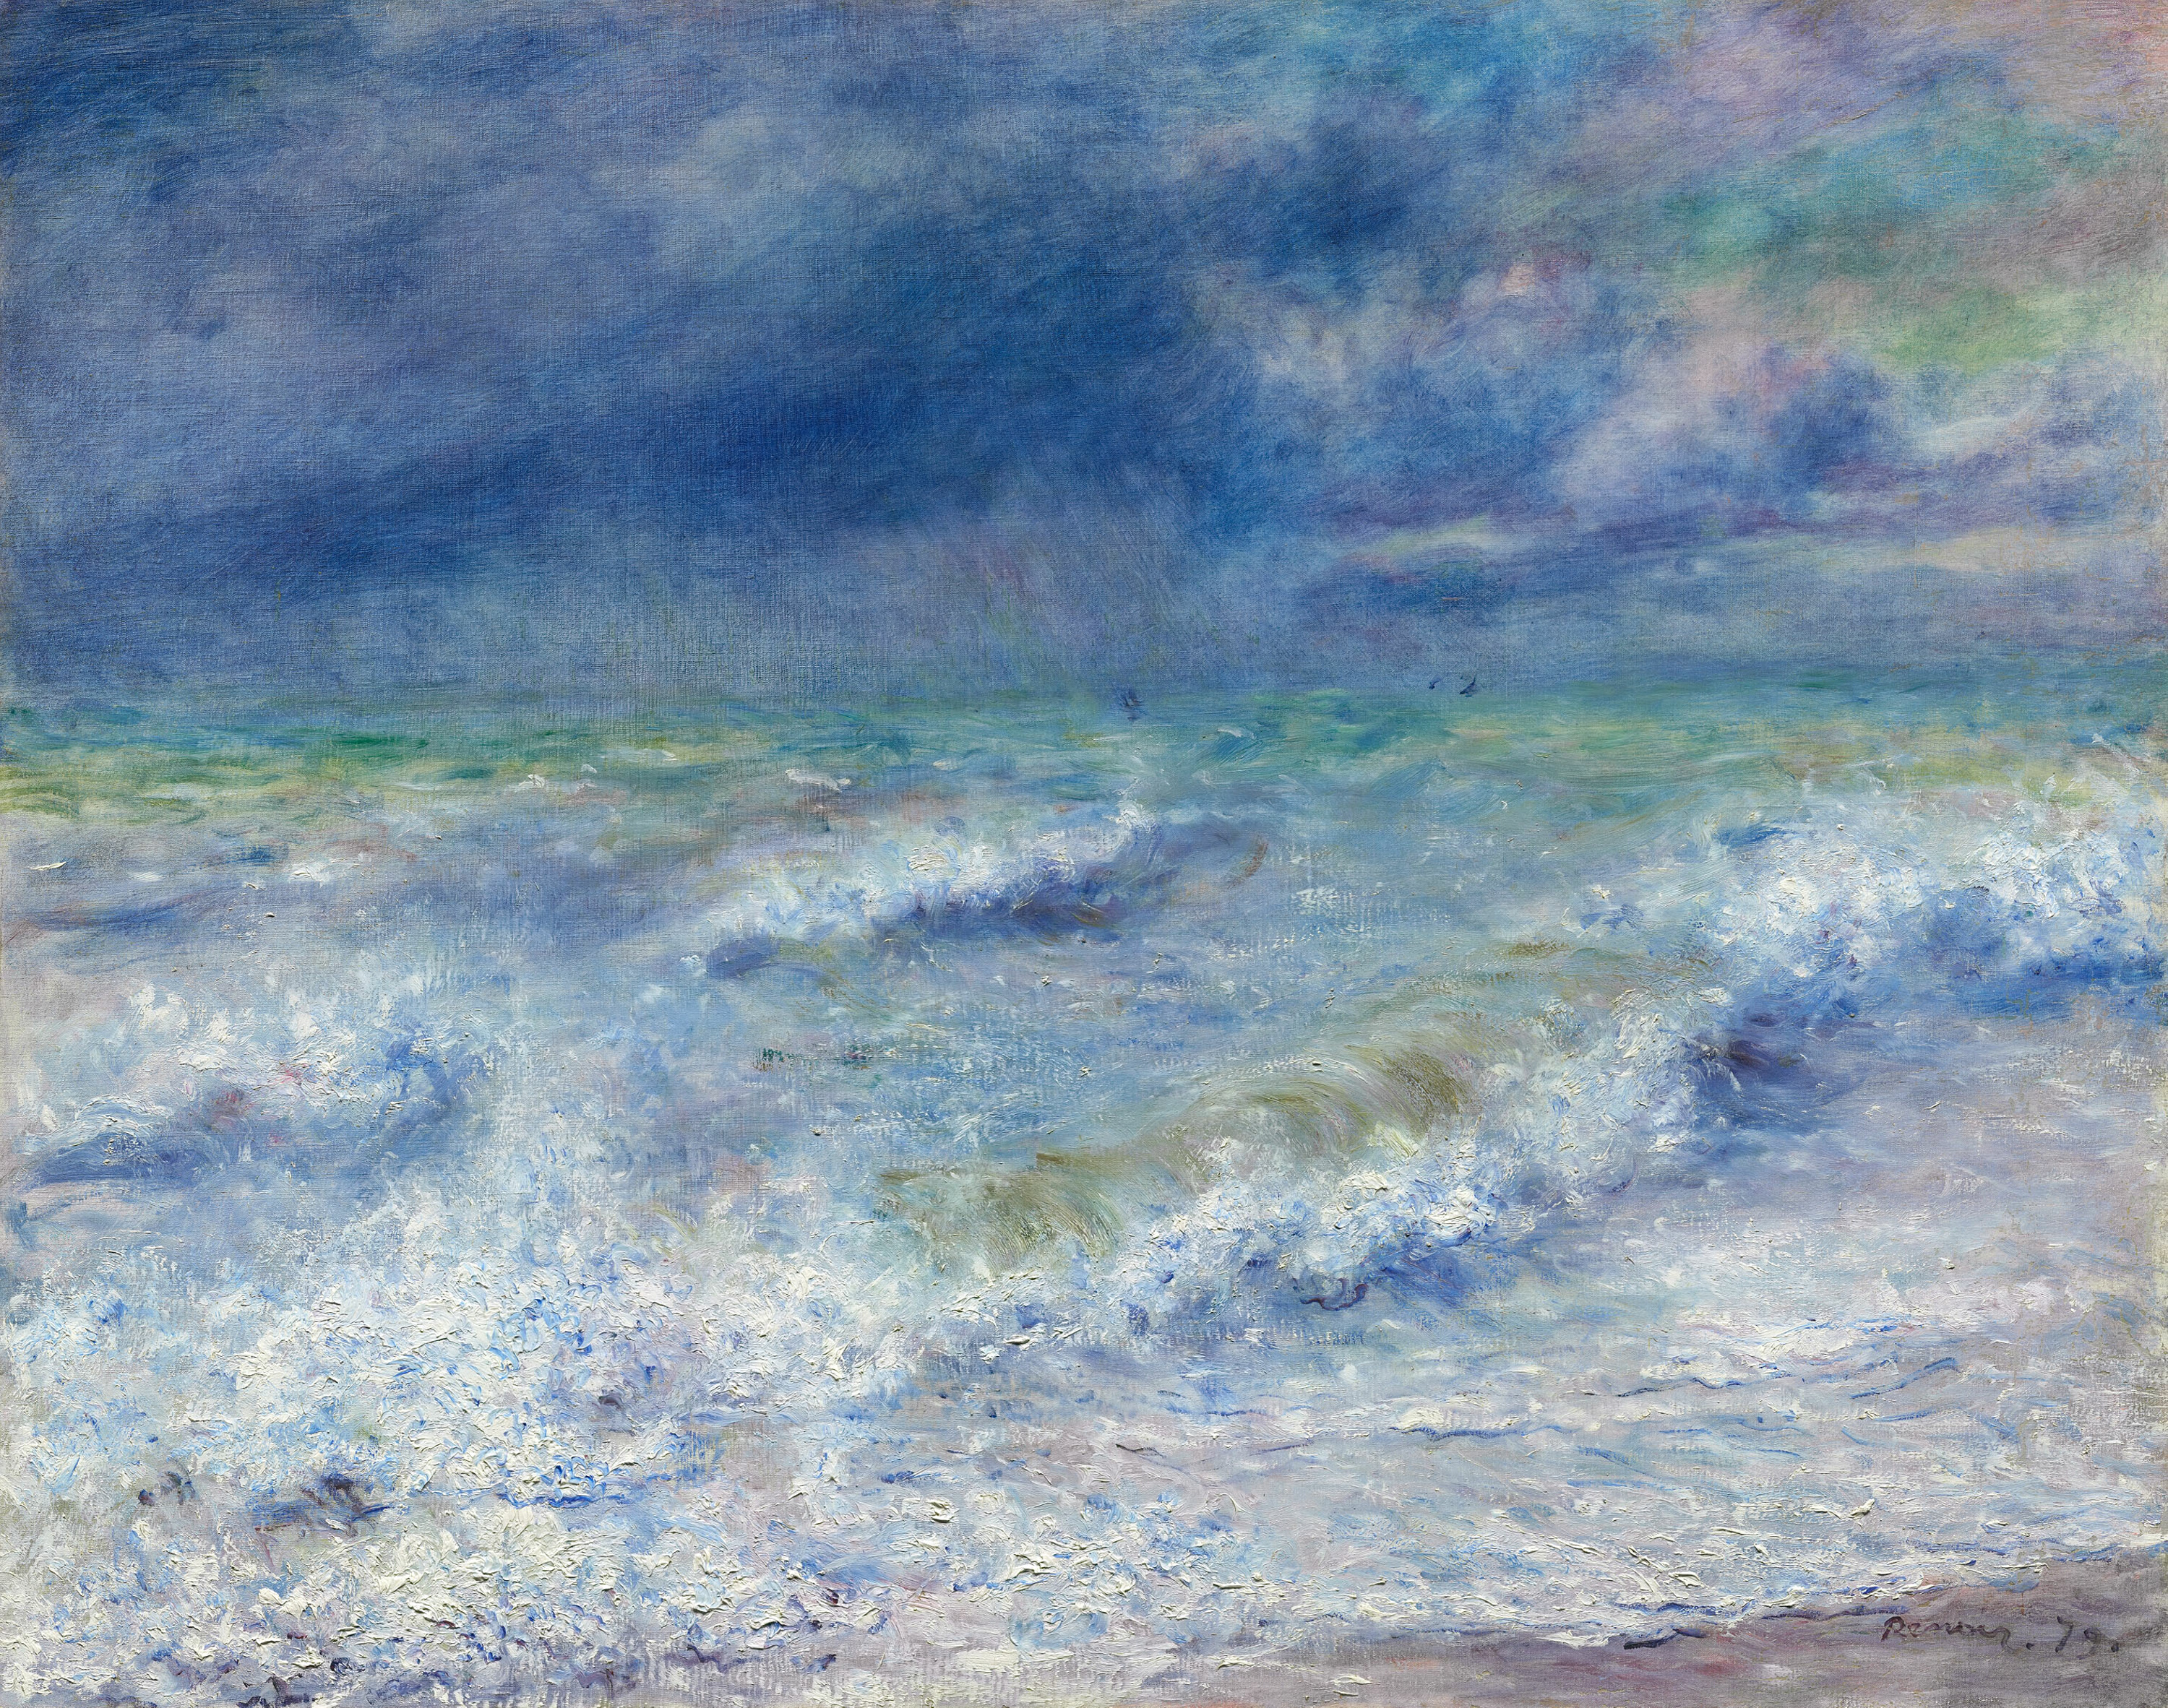 Vague by Pierre-Auguste Renoir - 1879 - 72.6 × 91.6 cm Art Institute of Chicago